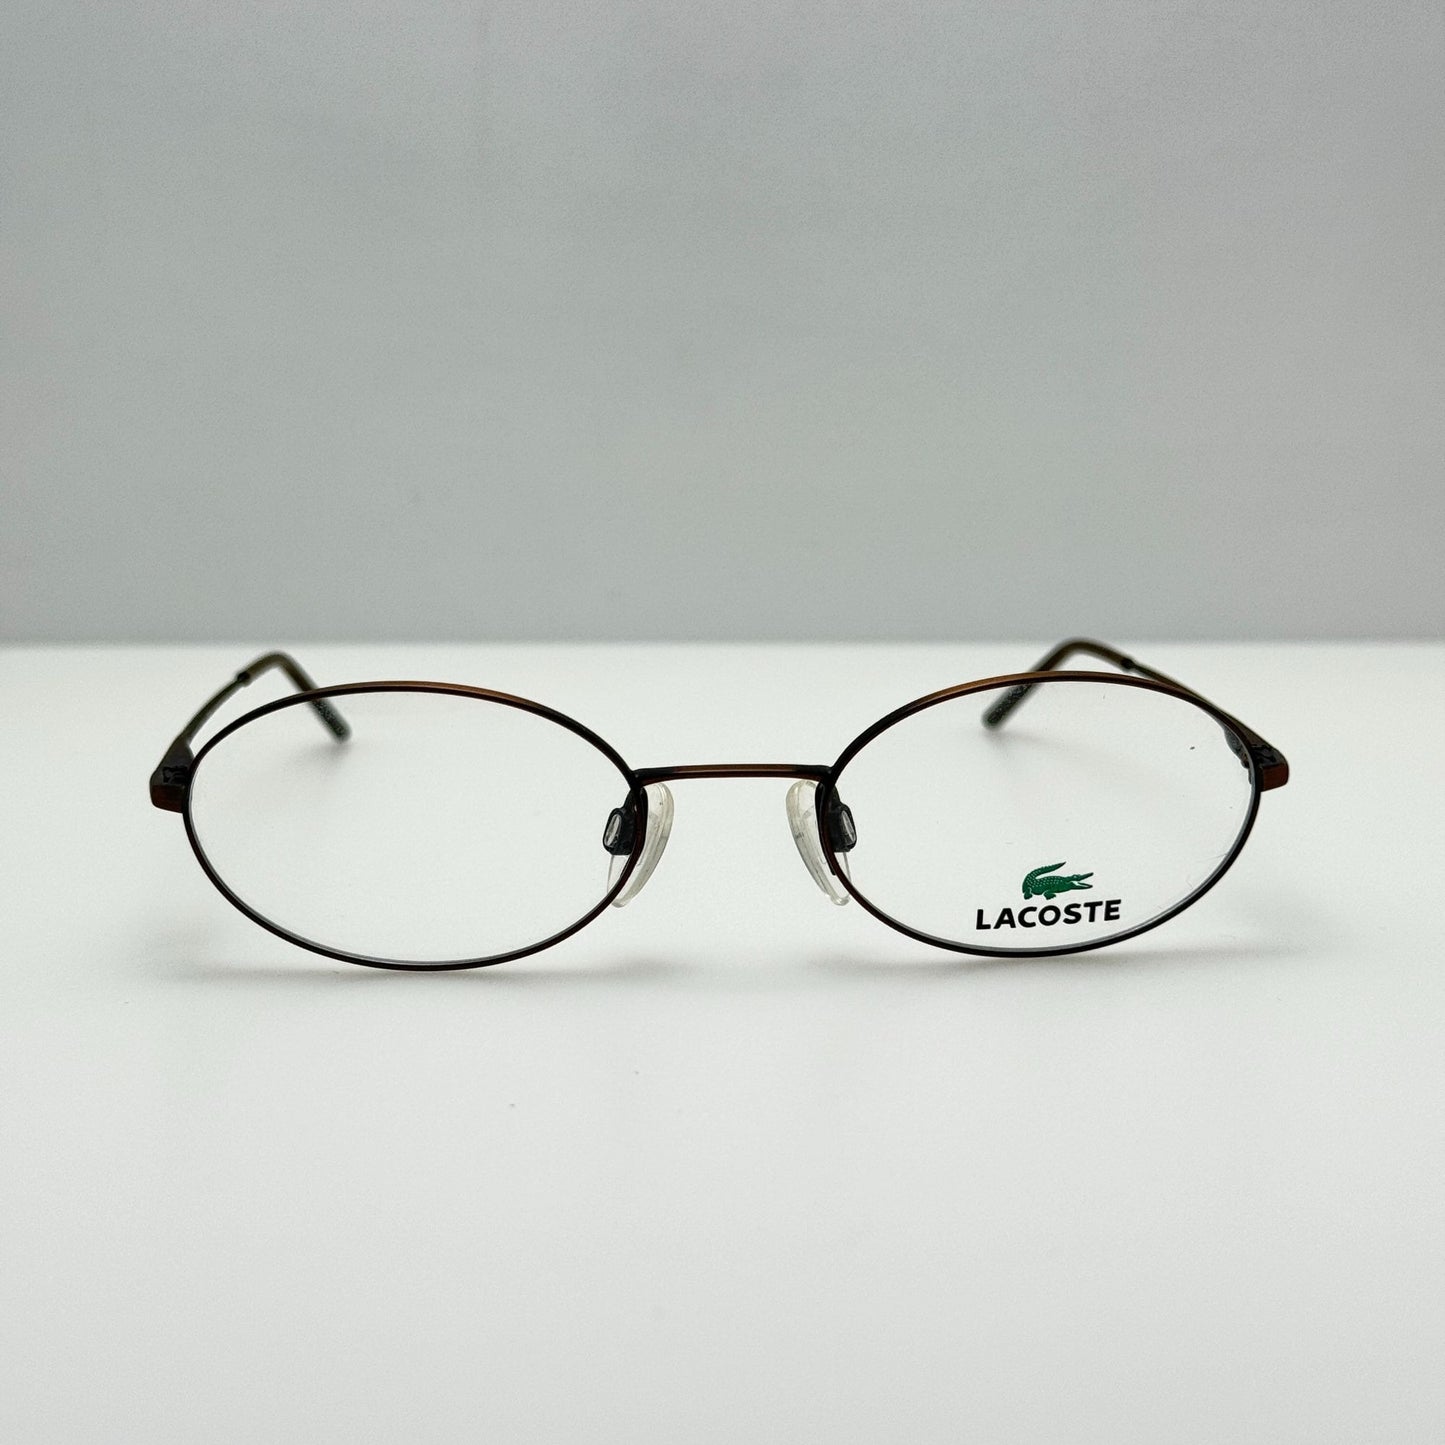 Lacoste Eyeglasses Eye Glasses Frames LA12008 BR 48-19-145